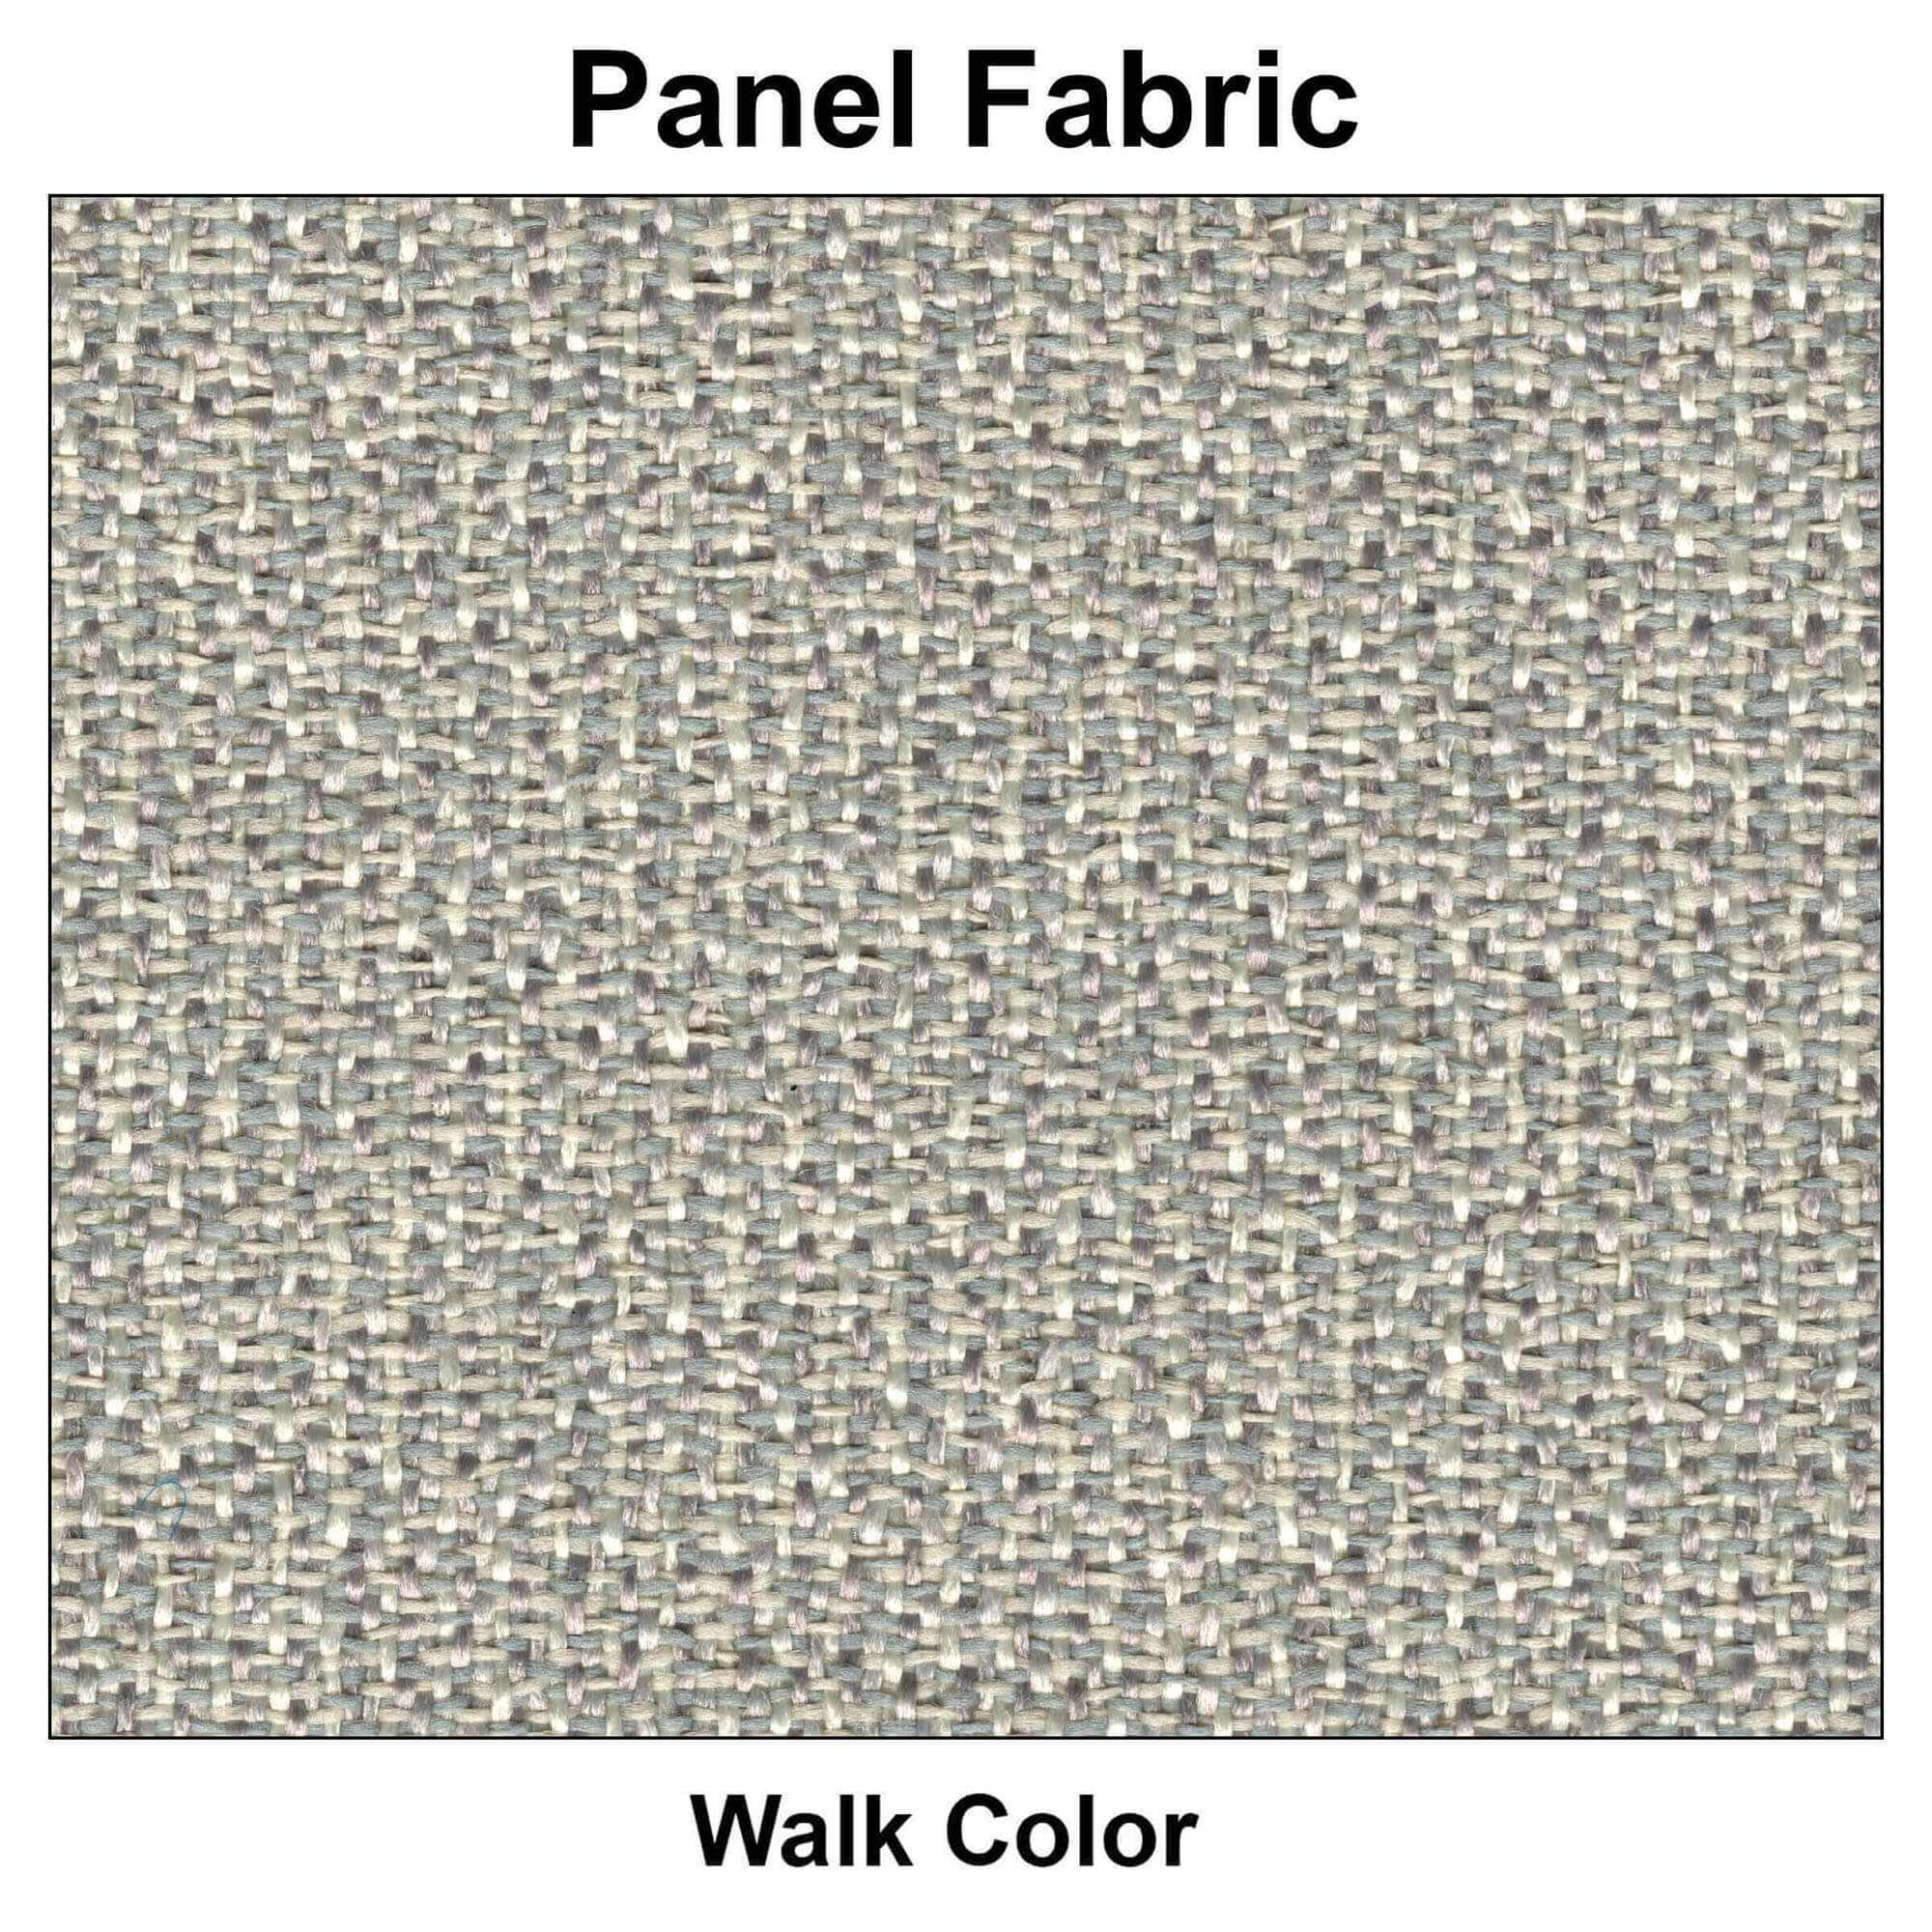 Modular office furniture panel fabric 1